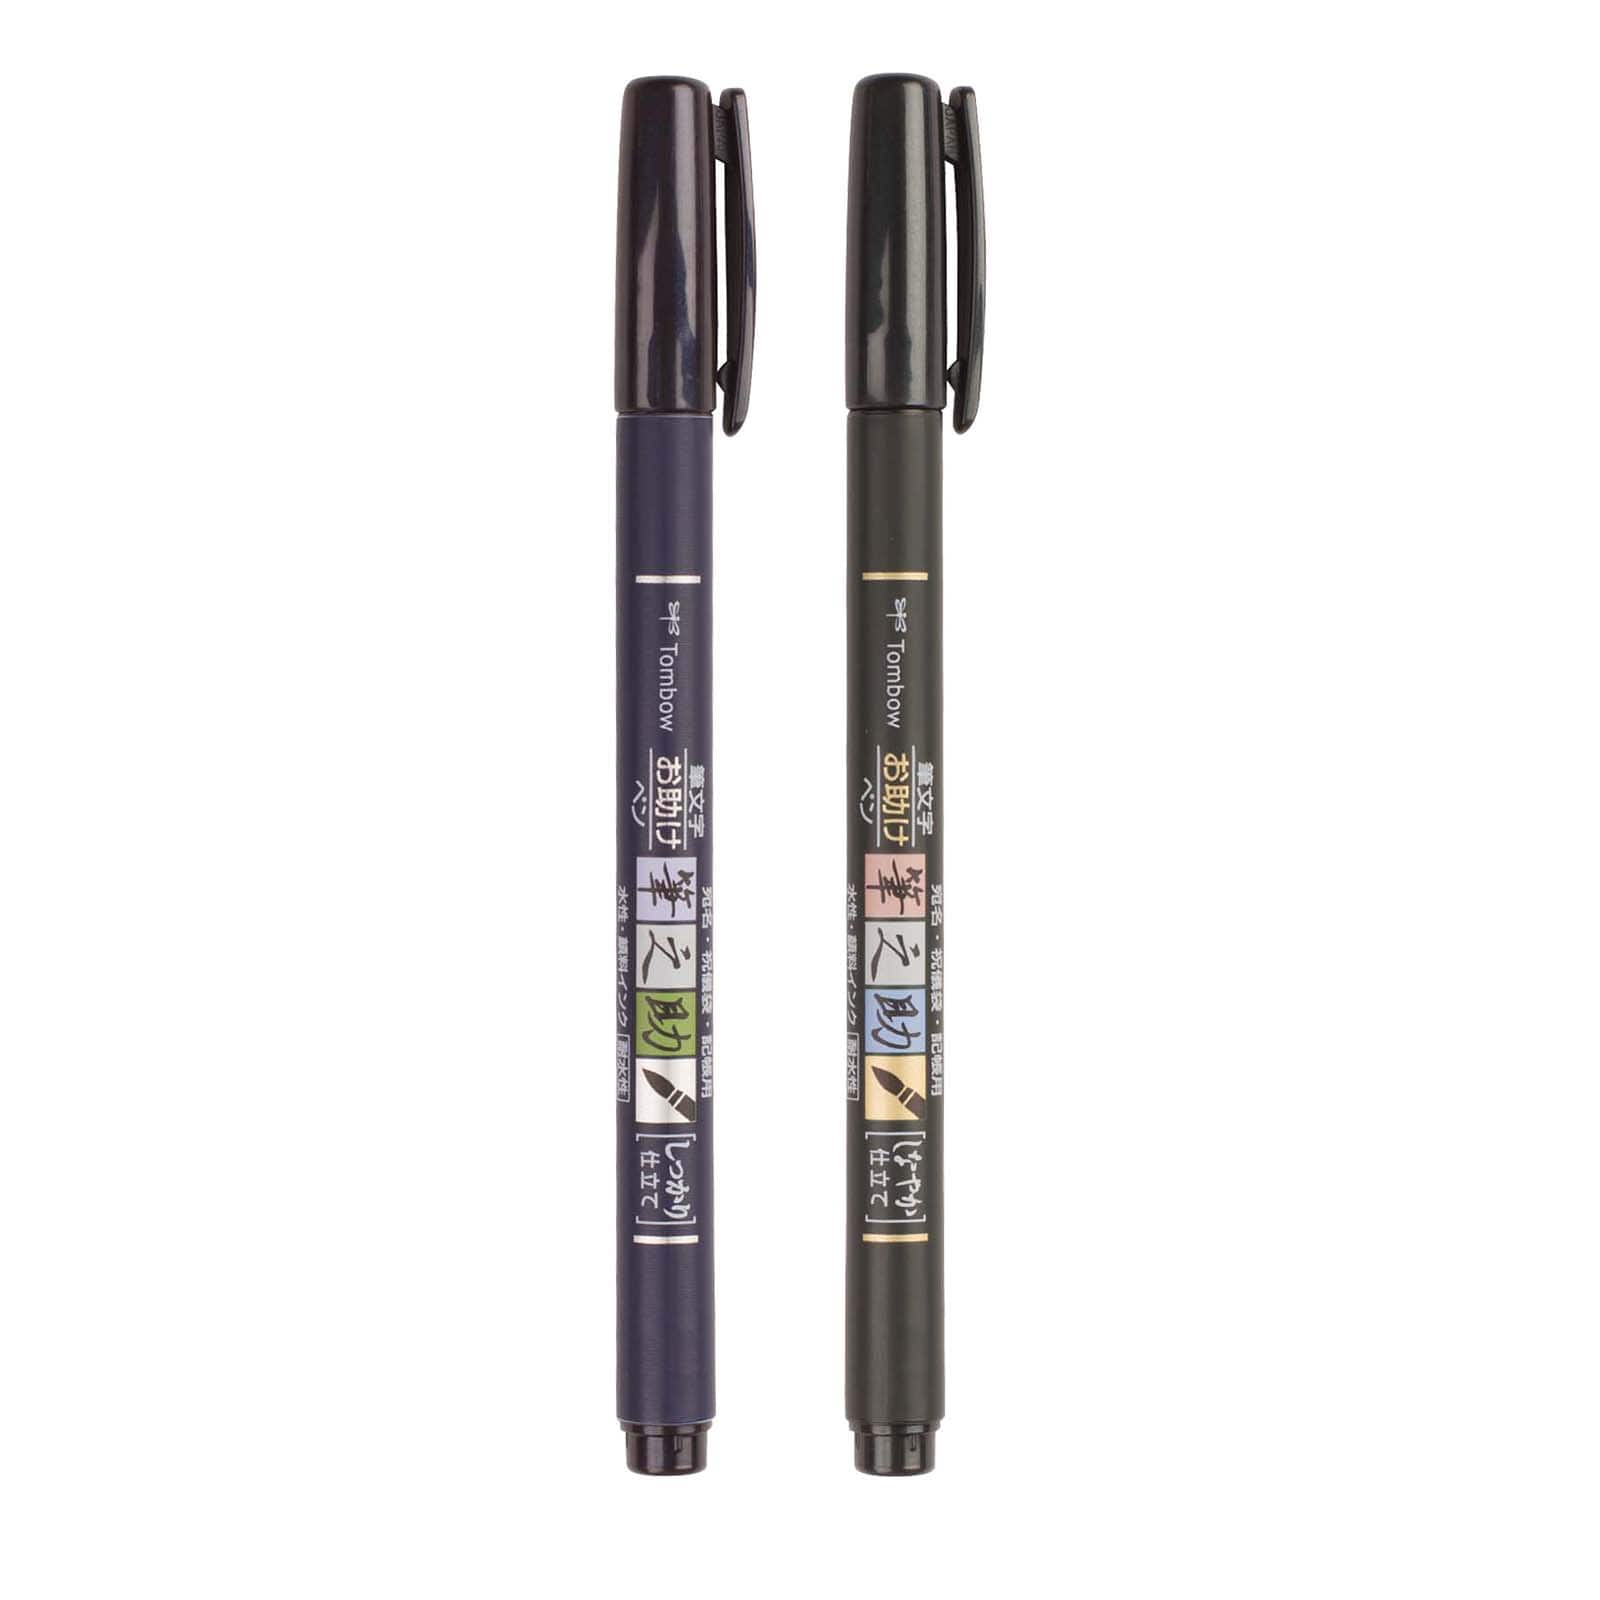 Fudenosuke Calligraphy Brush Pen – Trolley Square Market